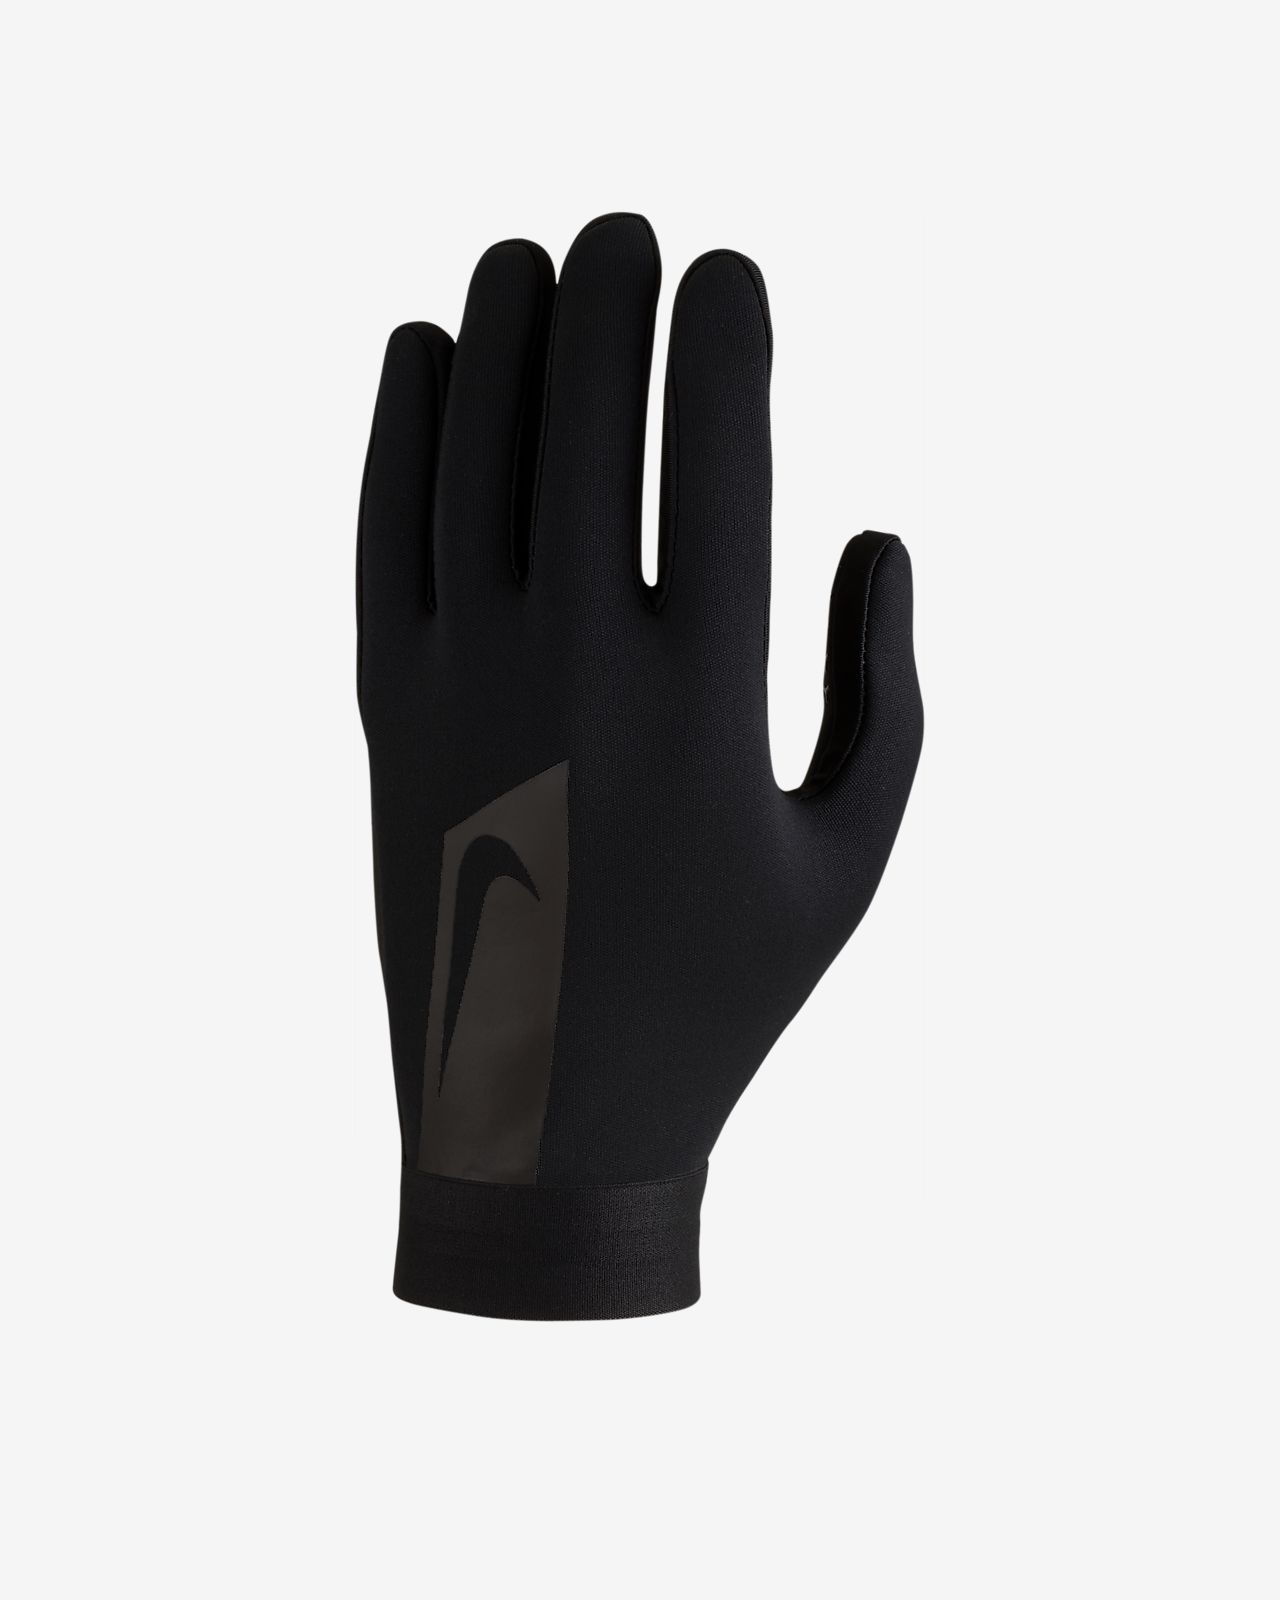 purple and black nike football gloves